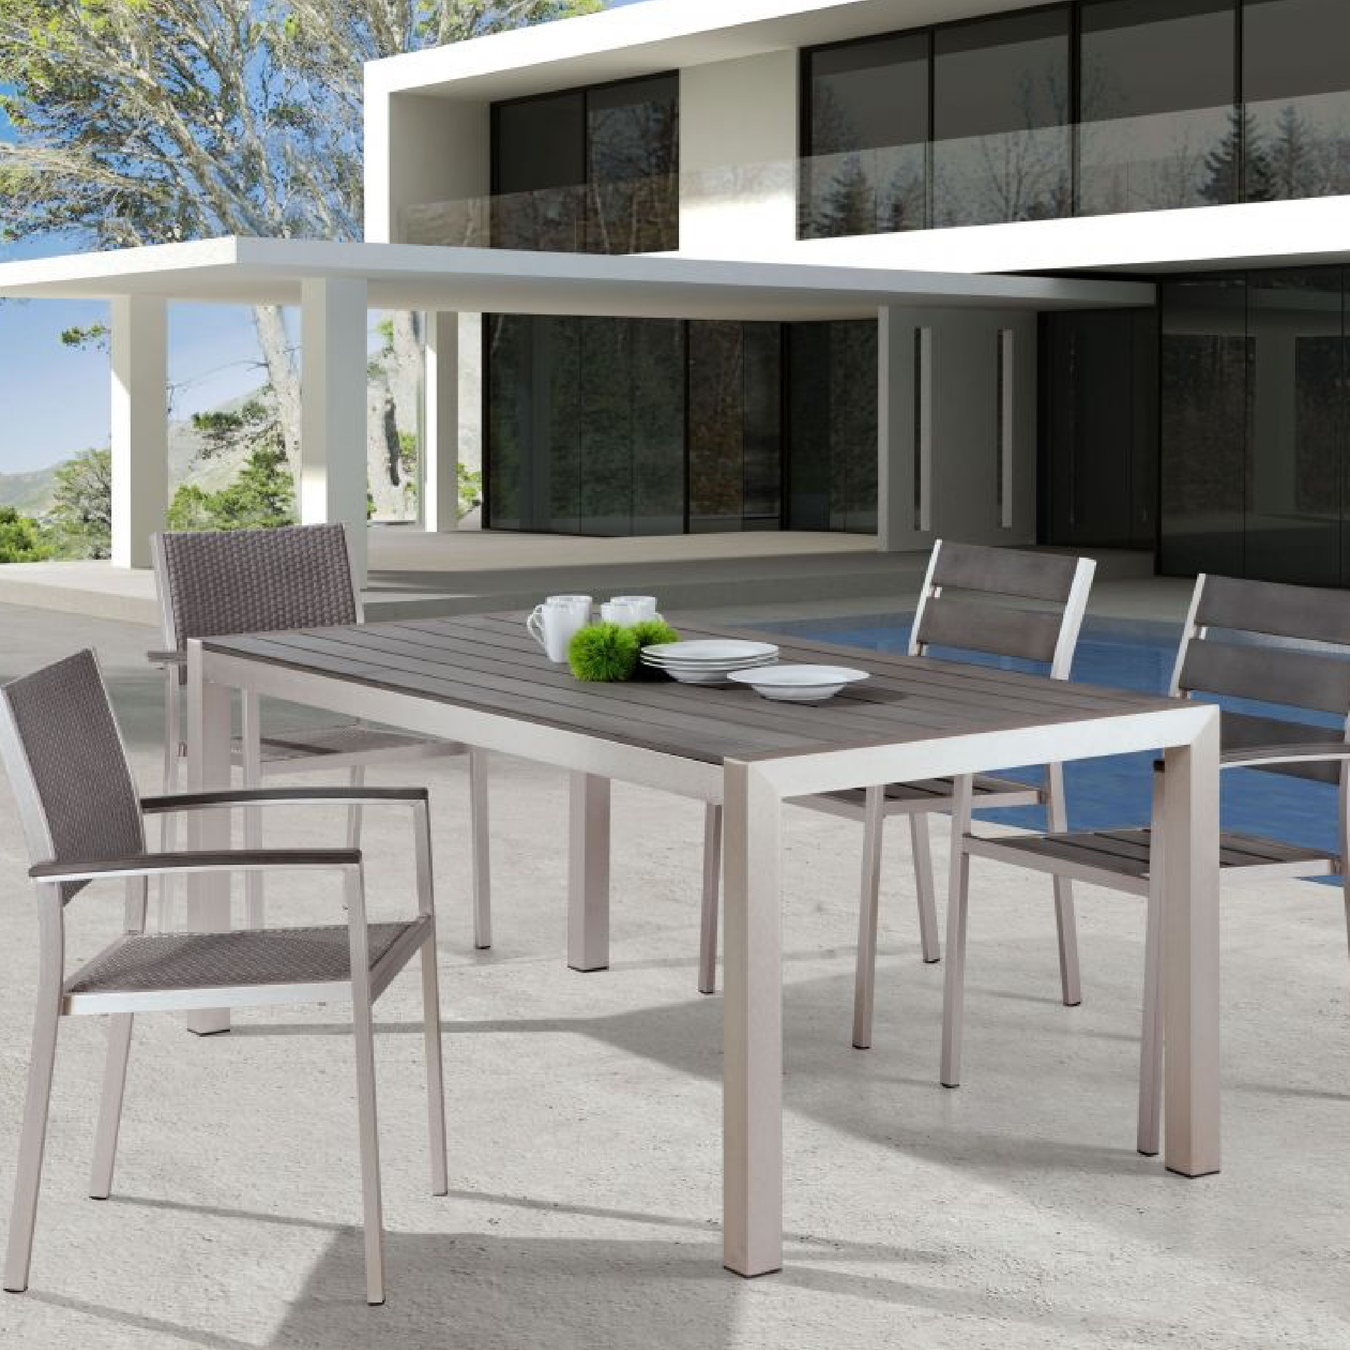 Outdoor patio table set